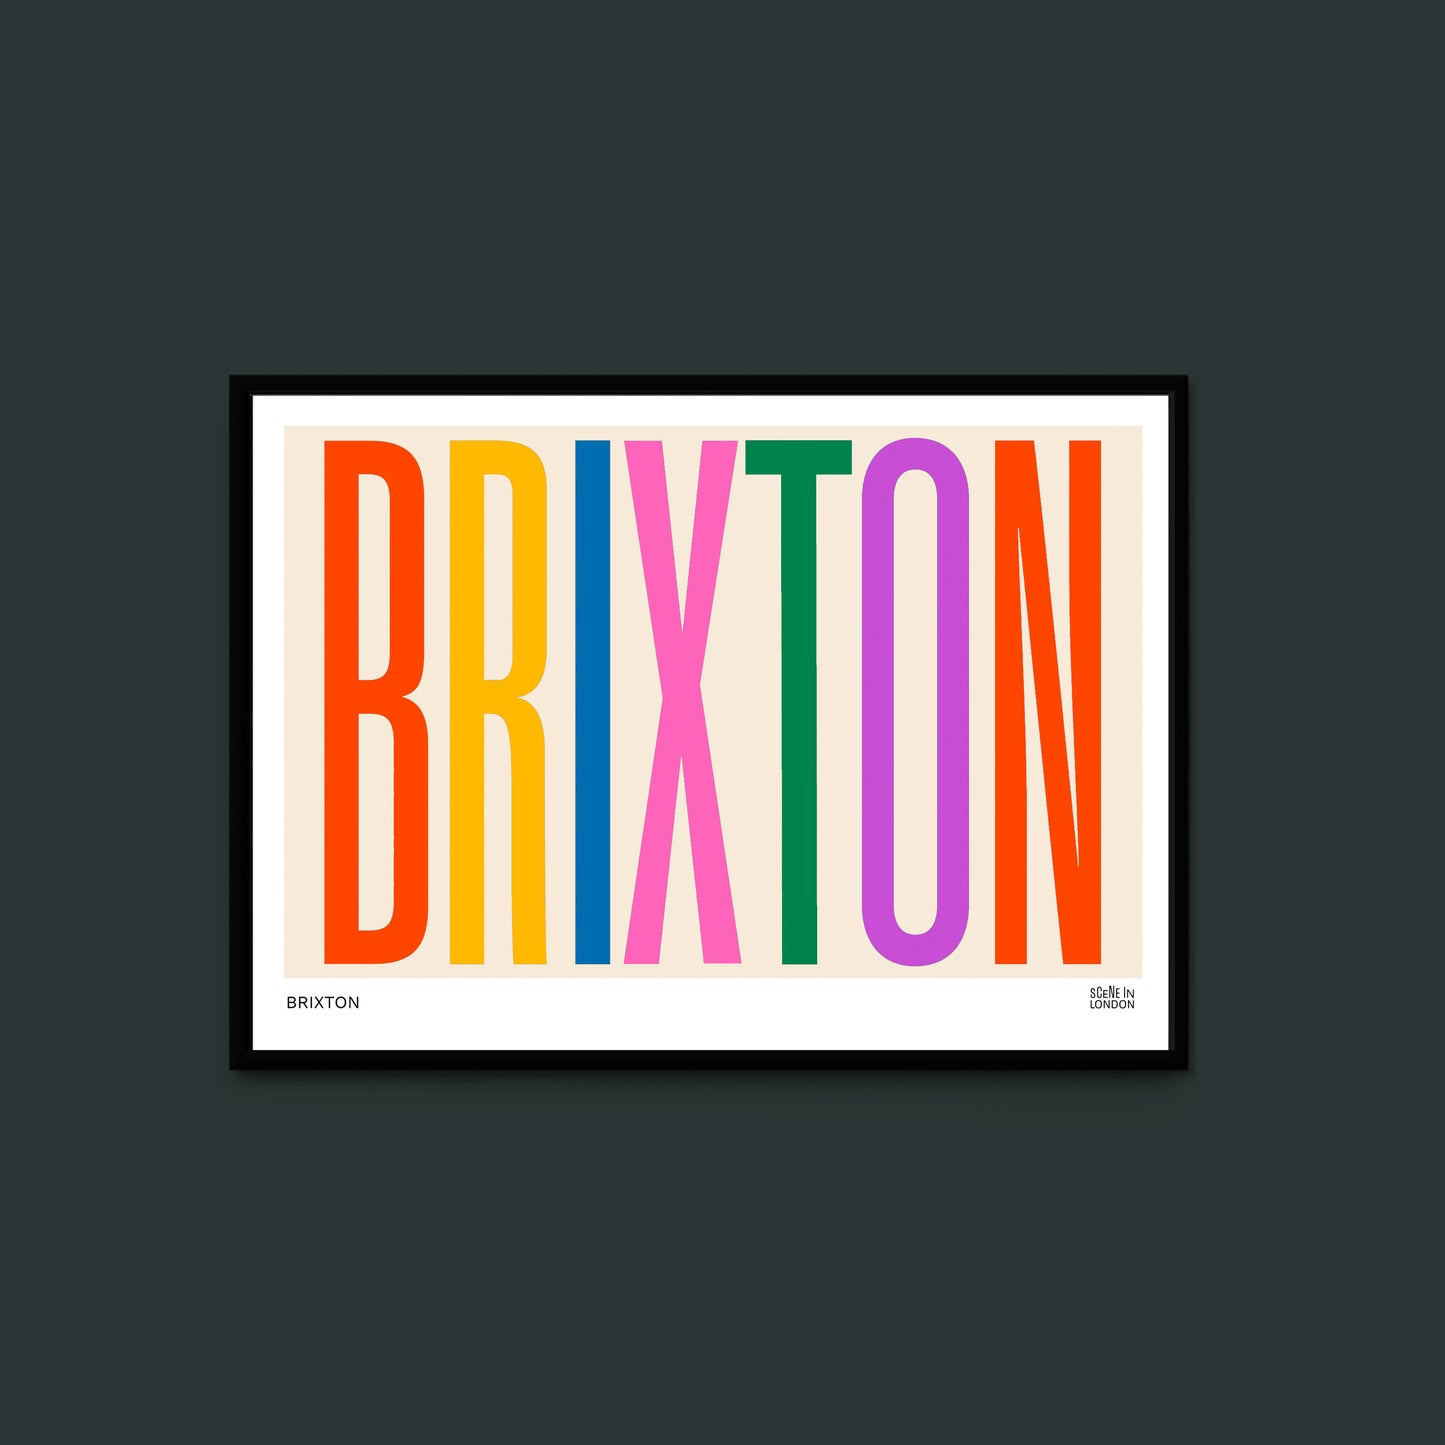 Brixton contemporary art print